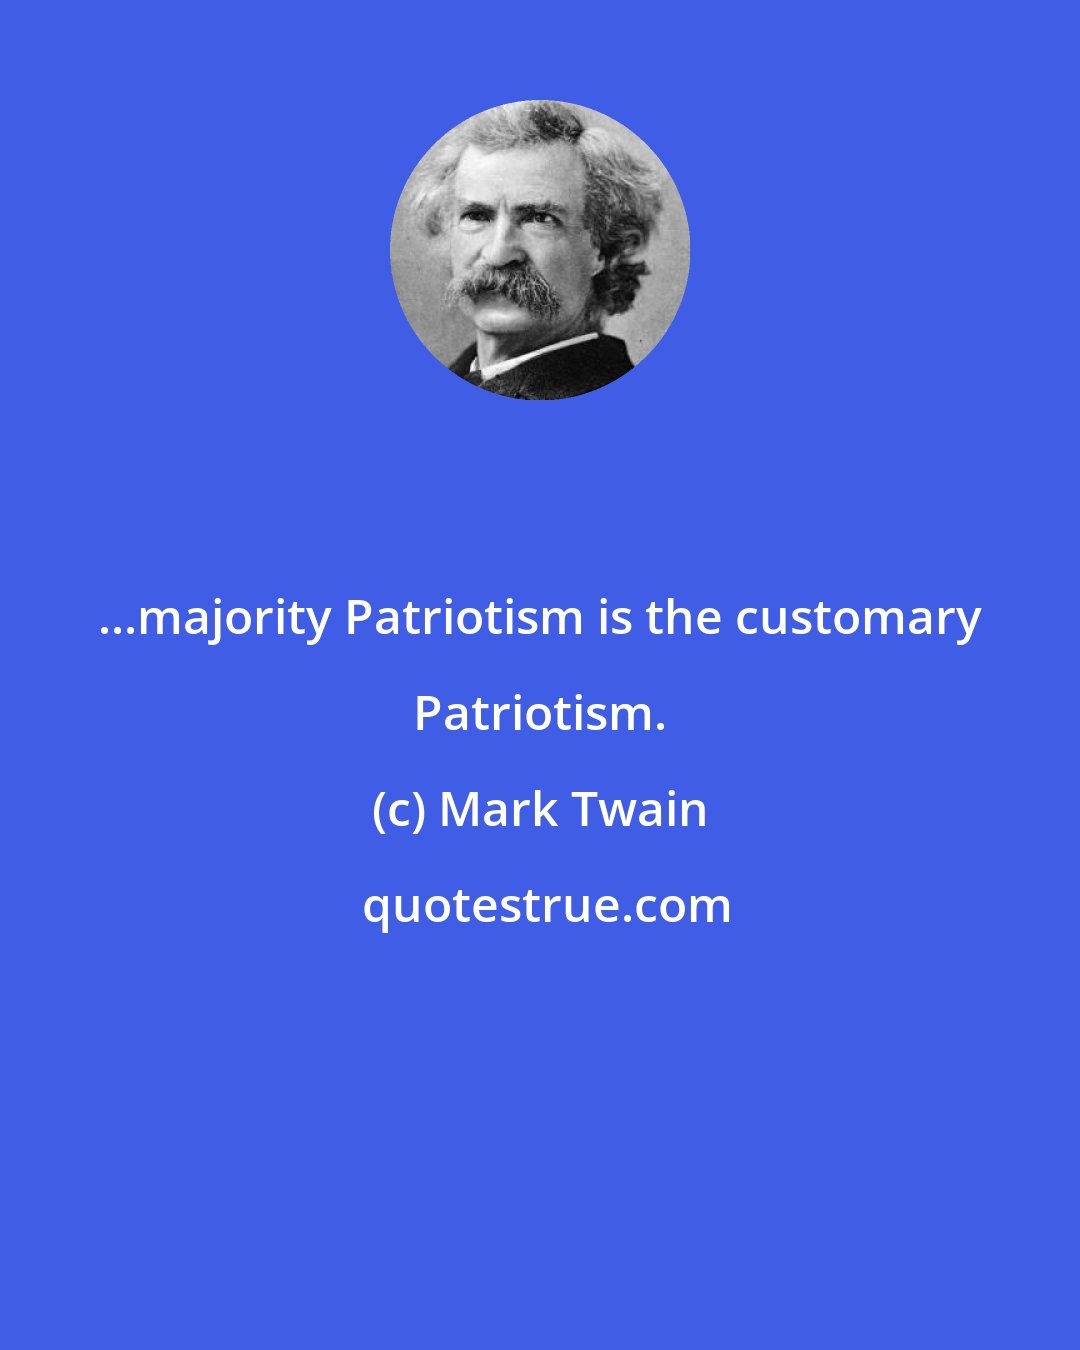 Mark Twain: ...majority Patriotism is the customary Patriotism.